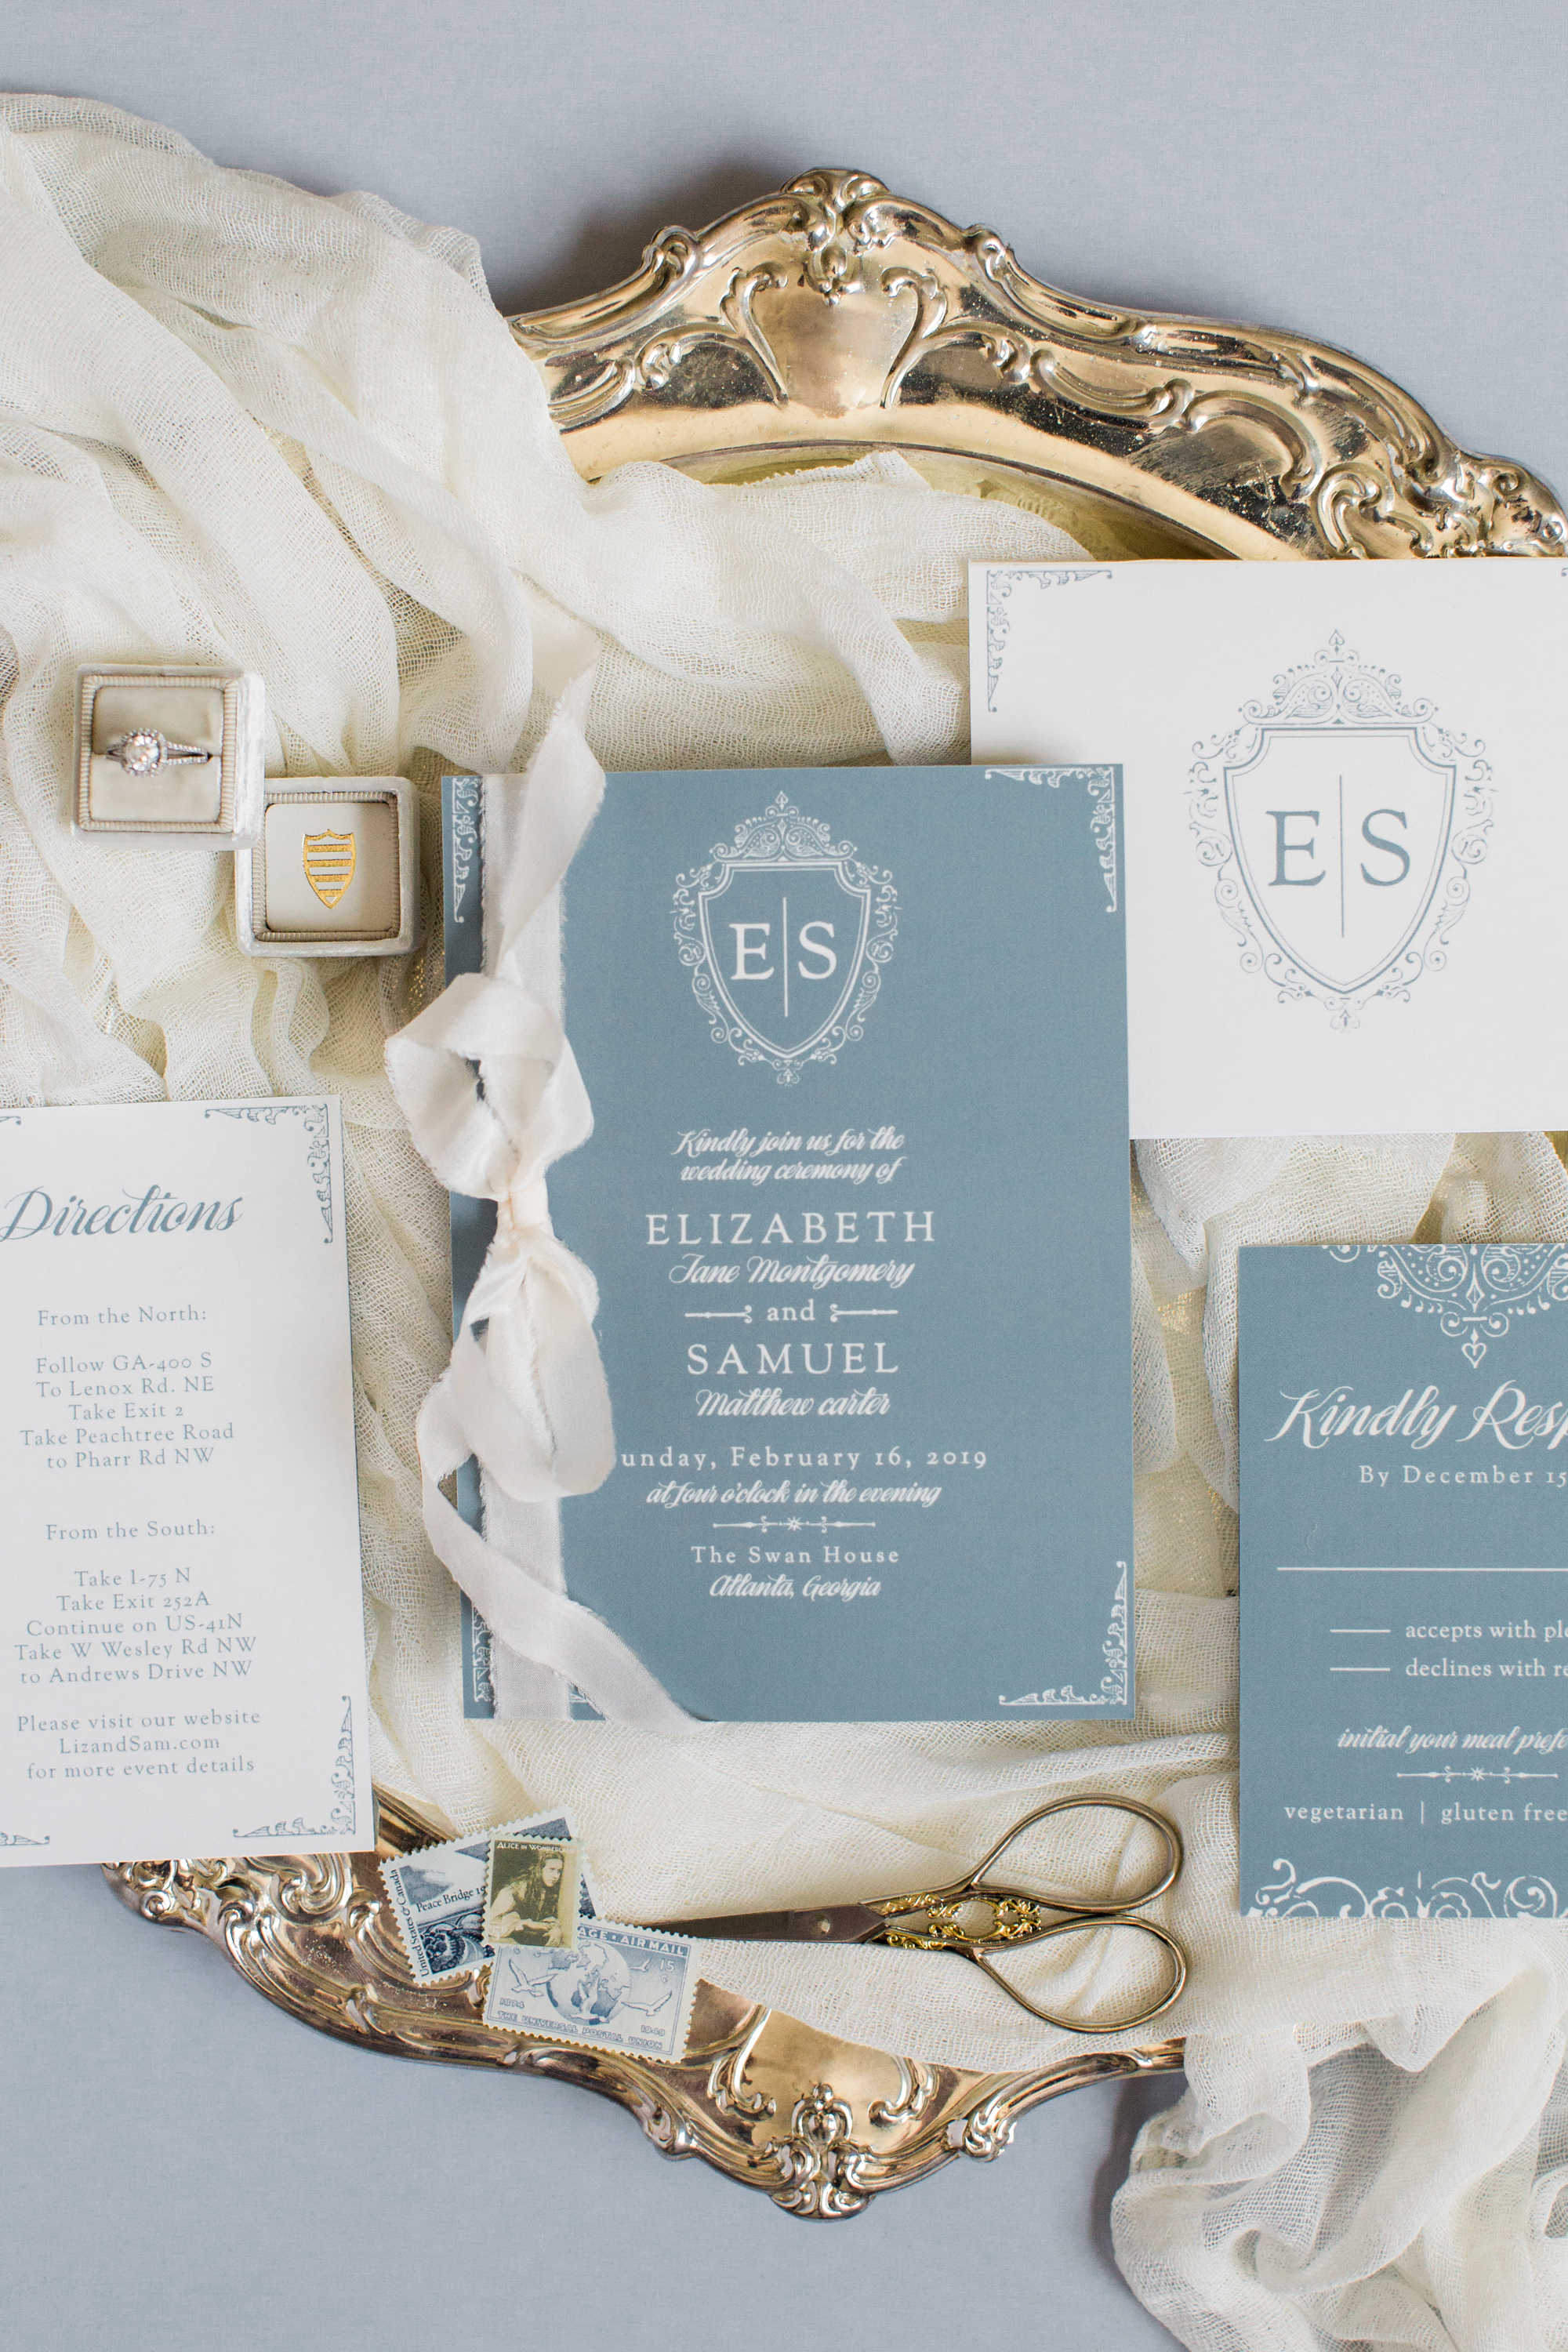 Who know Basic Invite has luxury wedding invitation designs?